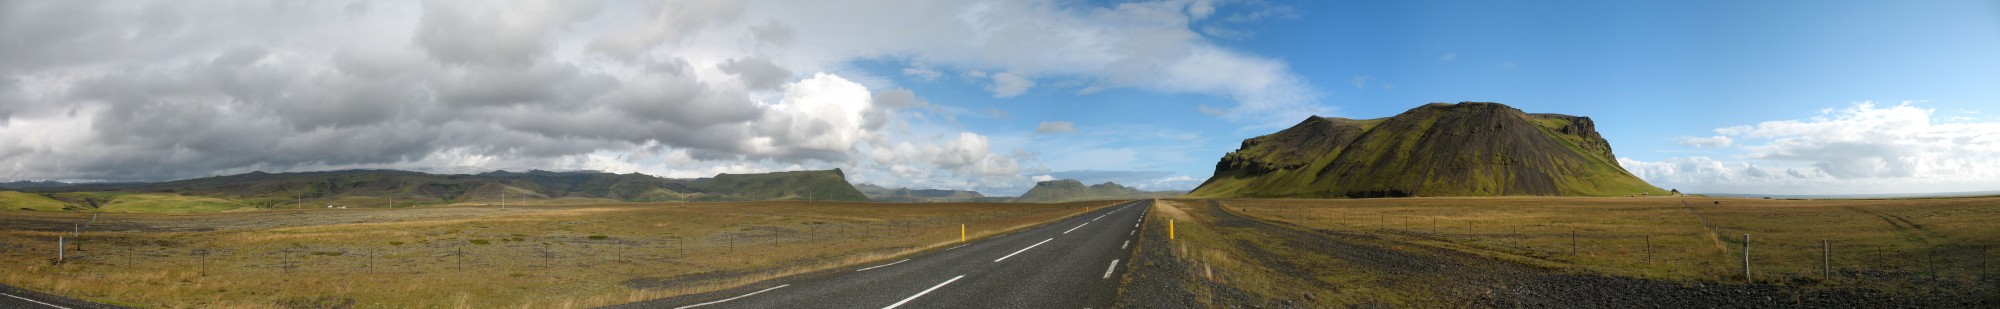 Iceland - 031